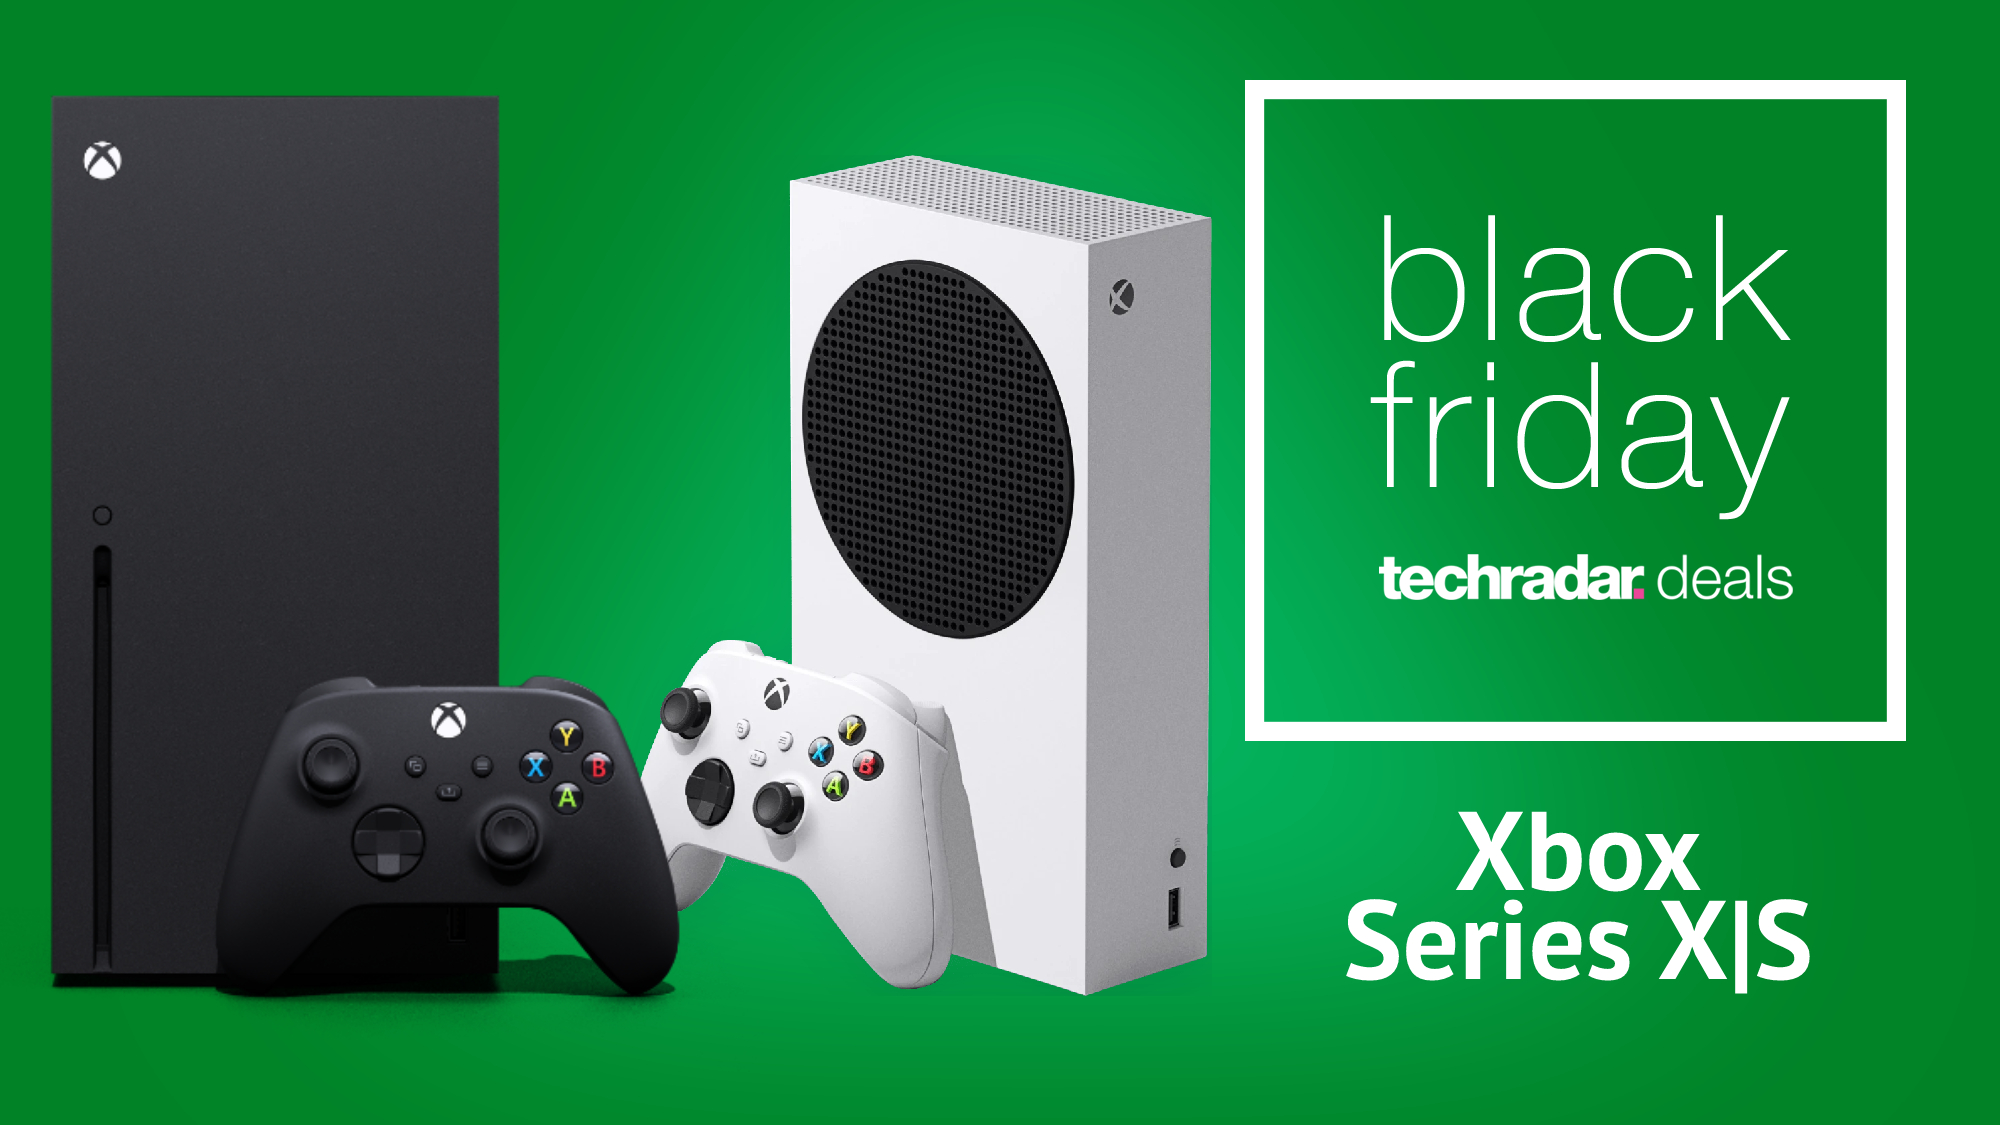 Xbox Series X Black Friday deals still TechRadar